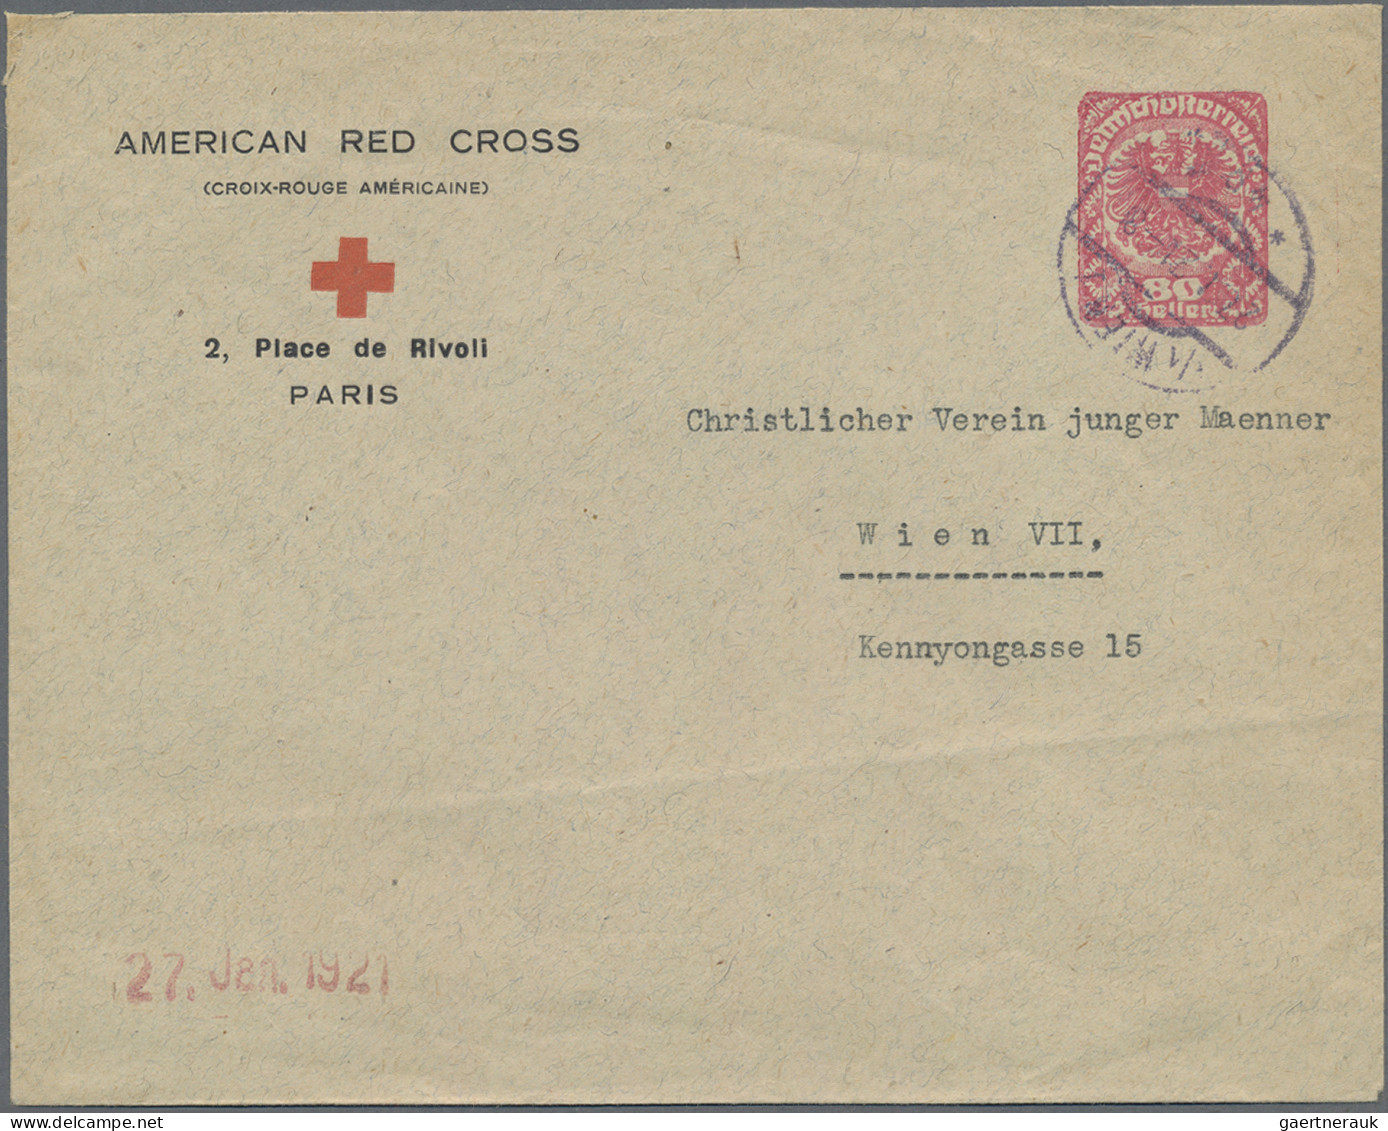 Thematics: Red Cross: 1921, "AMERICAN RED CROSS" (CROIX-ROUGE AMERICAINE) 2, Pla - Cruz Roja